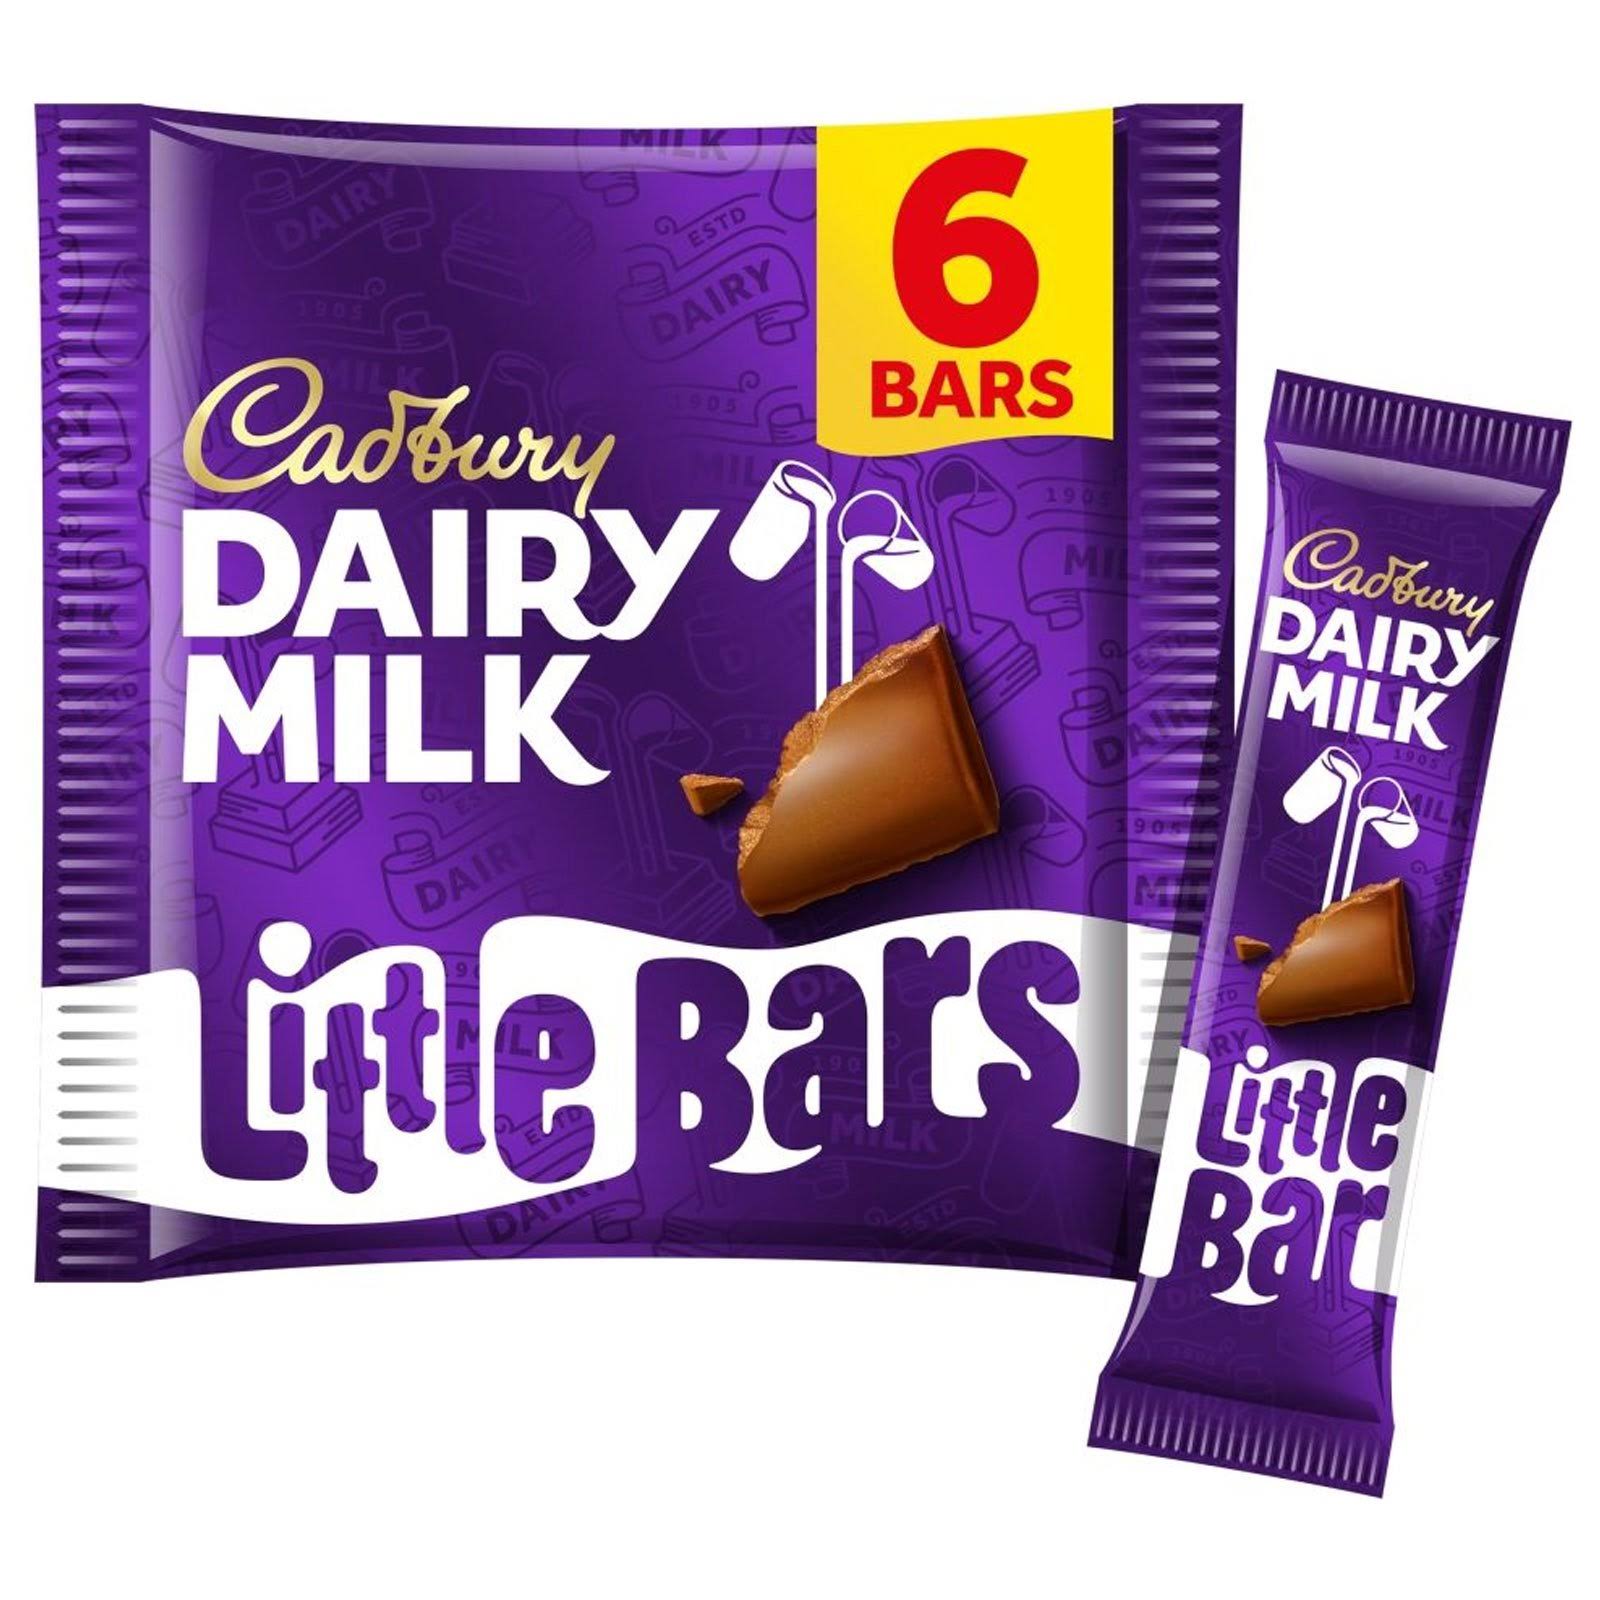 Cadbury Dairy Milk Little Bars